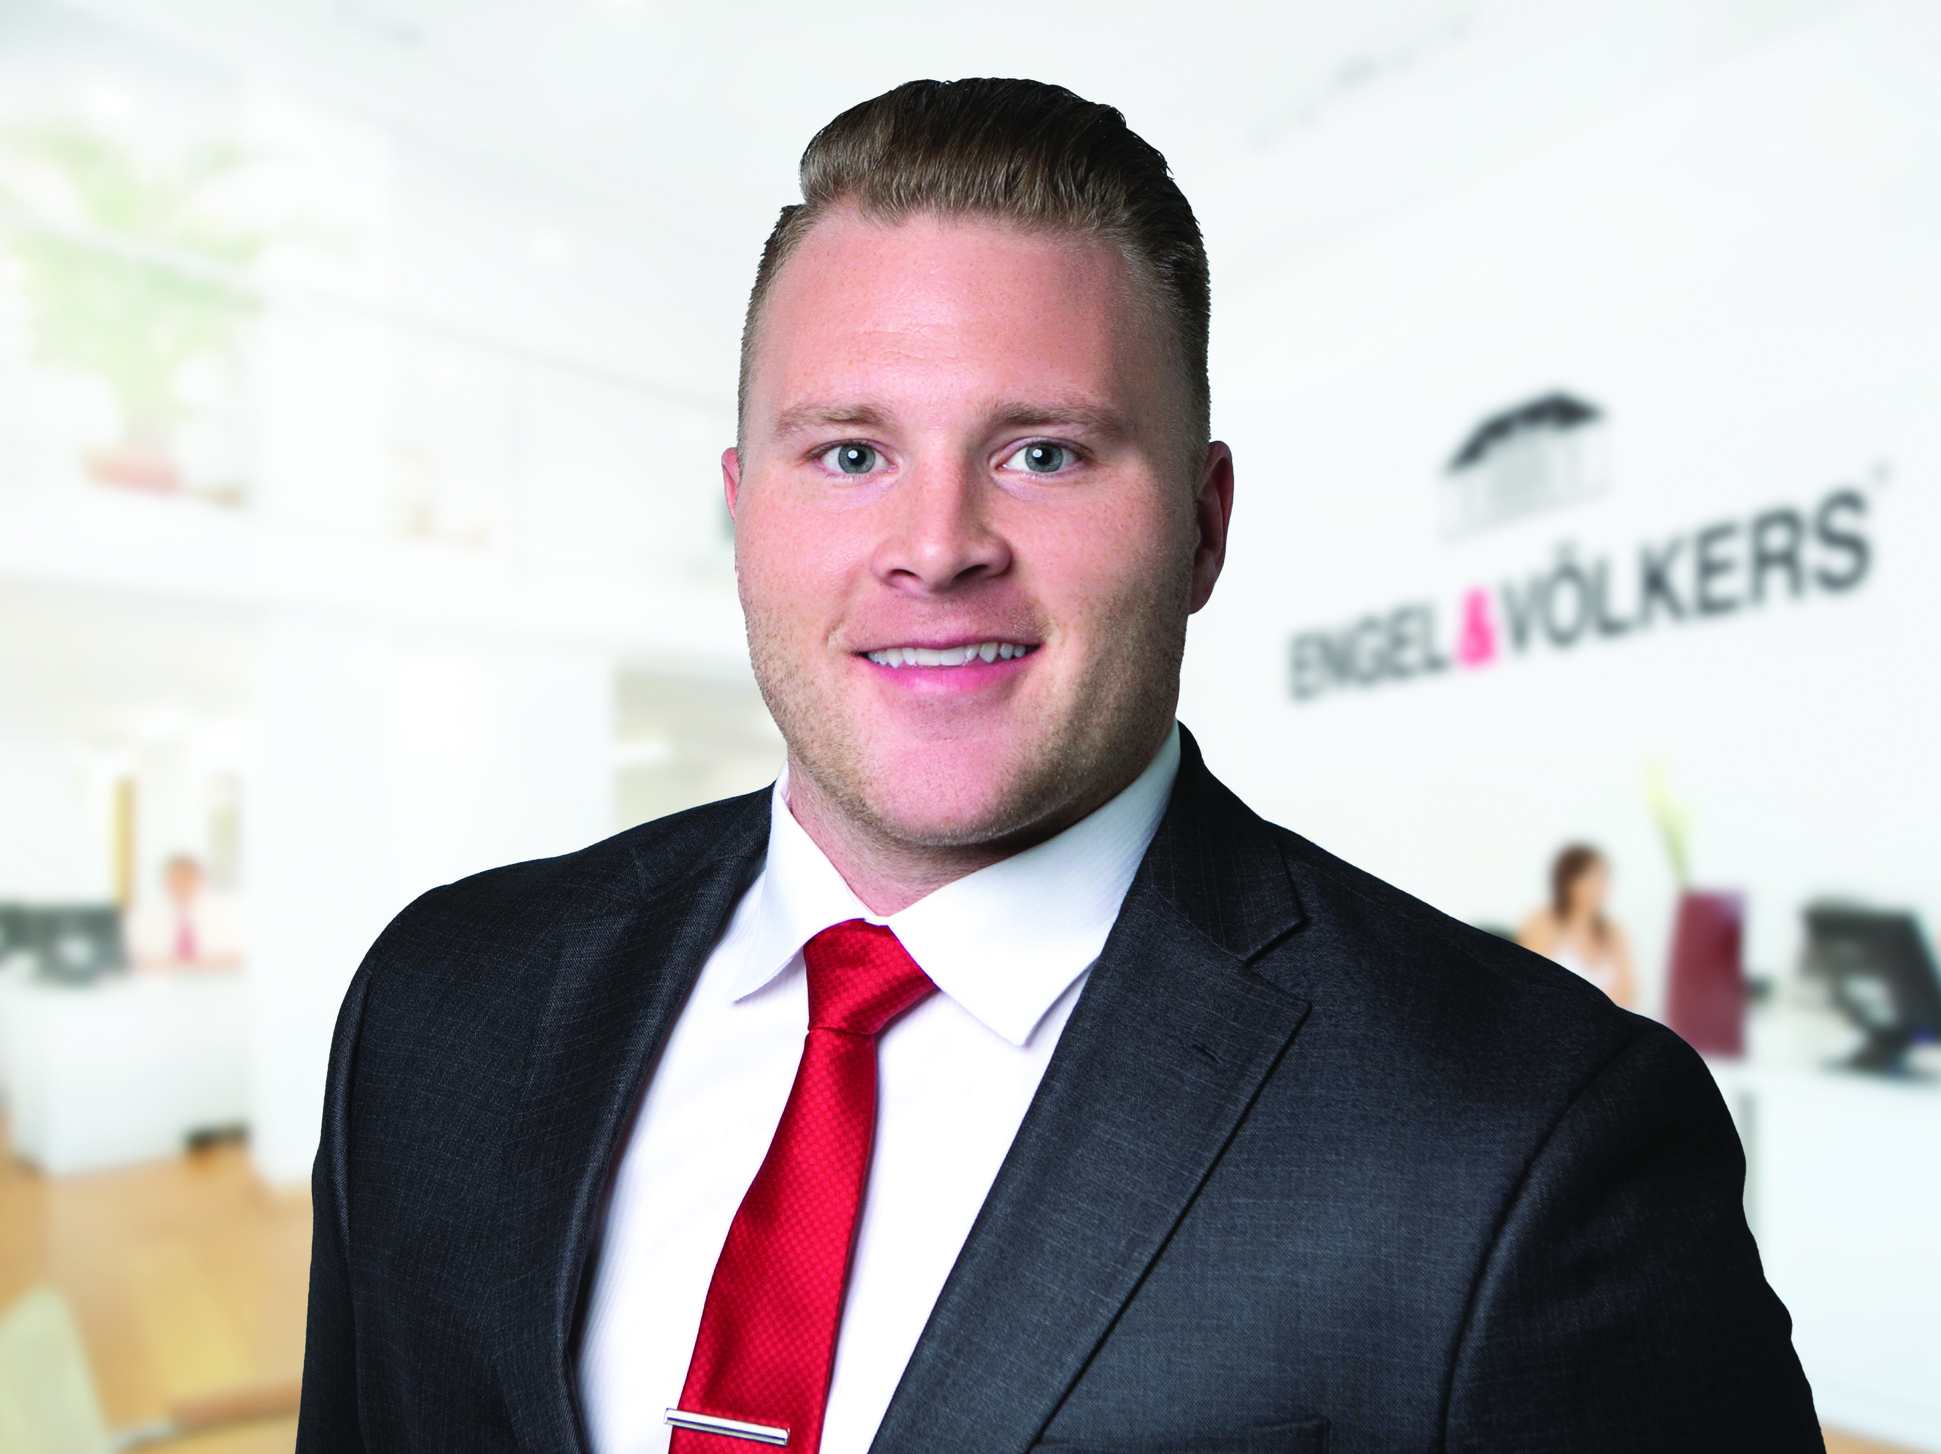 Corey Hasting, License Partner of Engel & Völkers Jacksonville